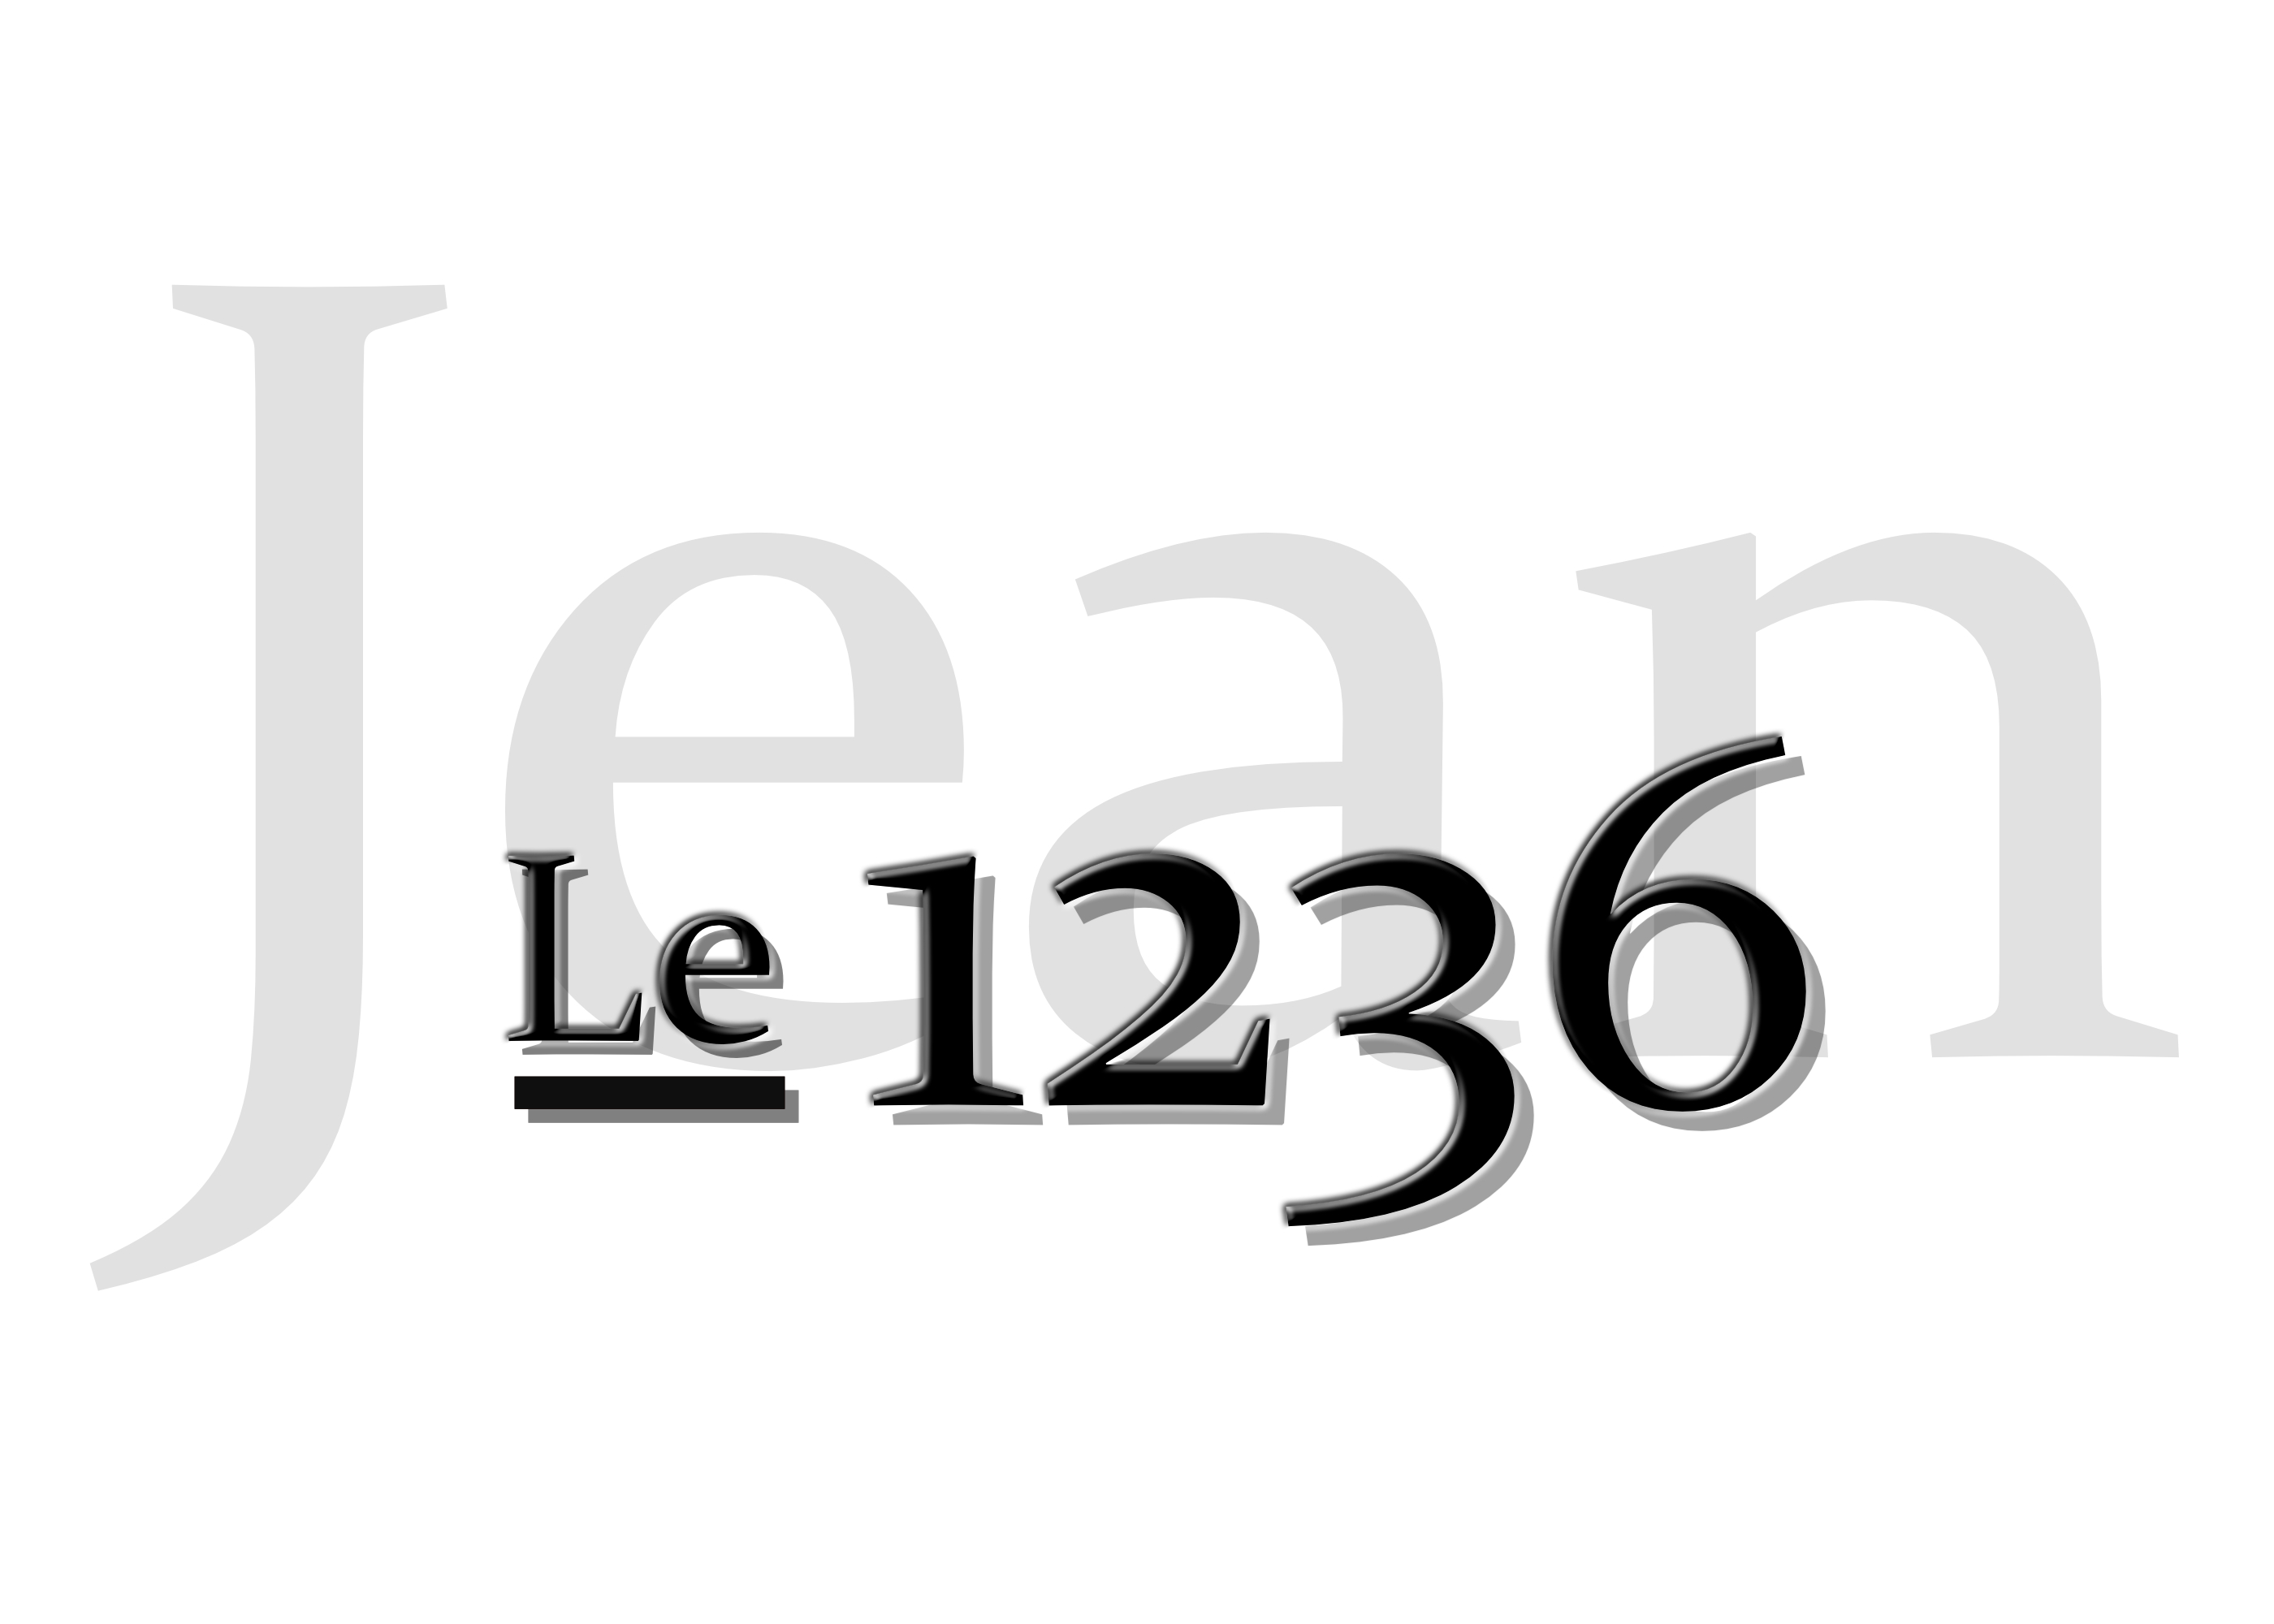 Le 1236 logo